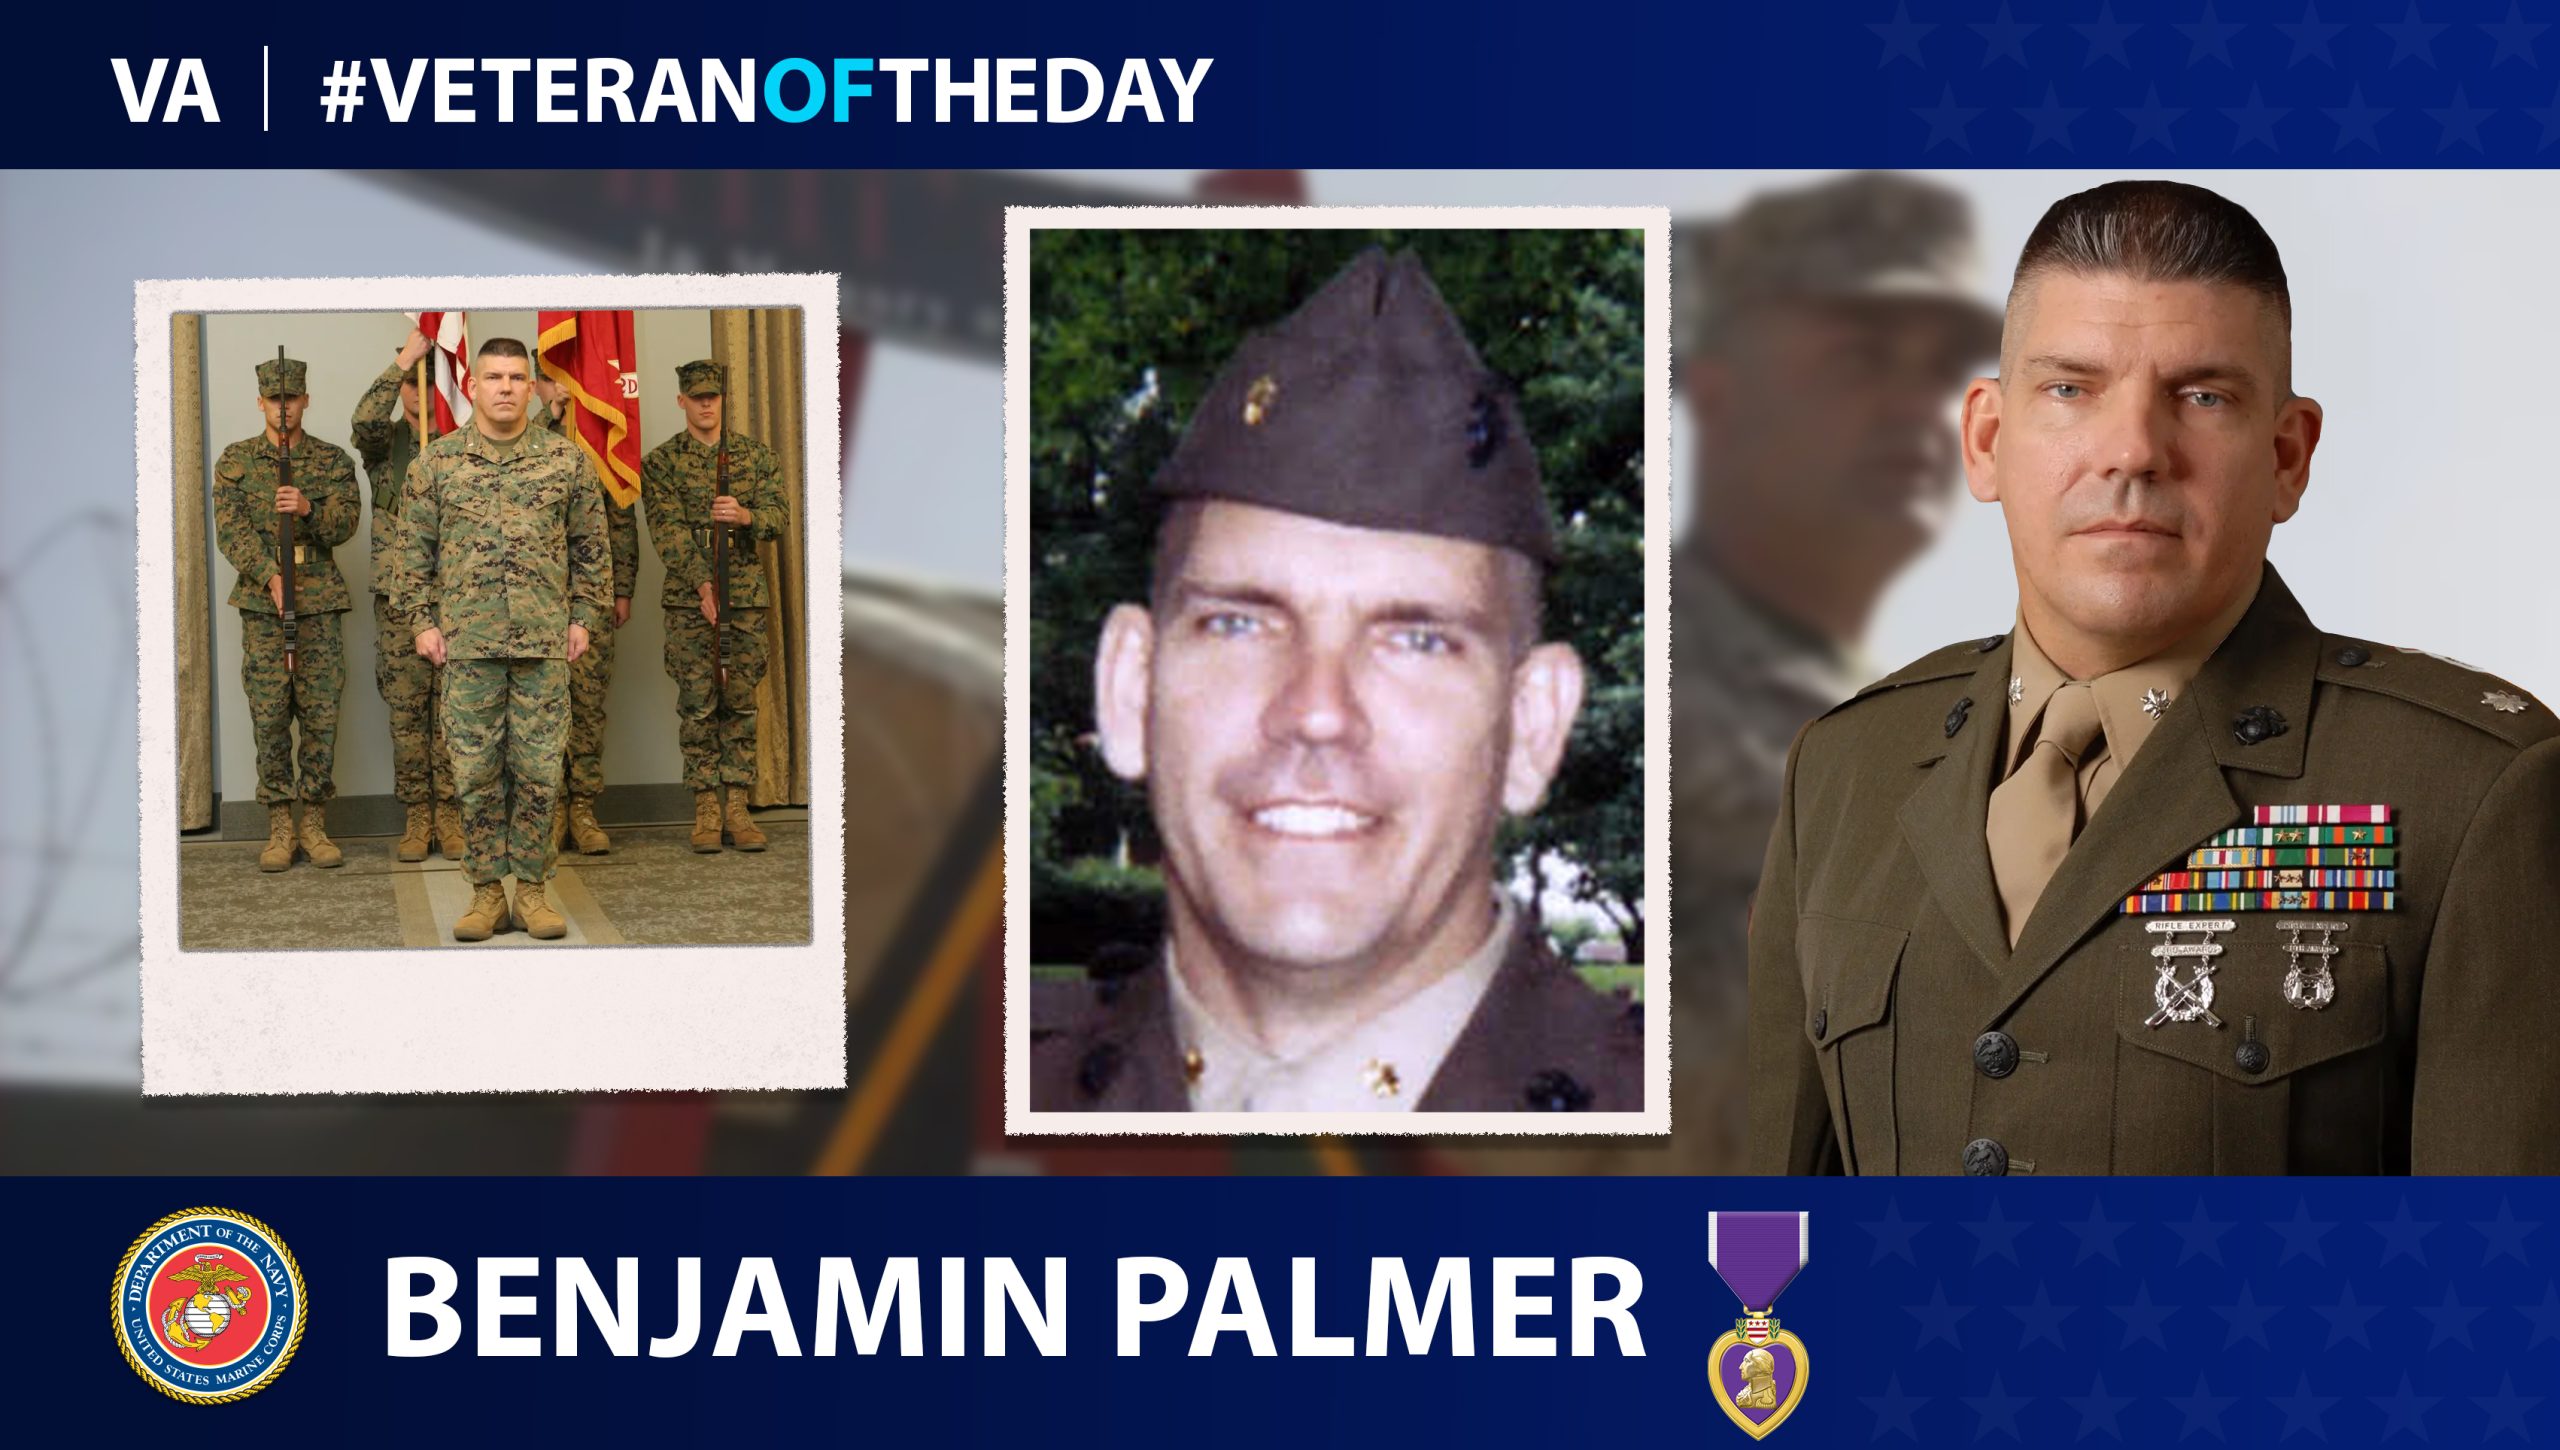 Marine Corps Veteran Benjamin Palmer is today’s Veteran of the Day.